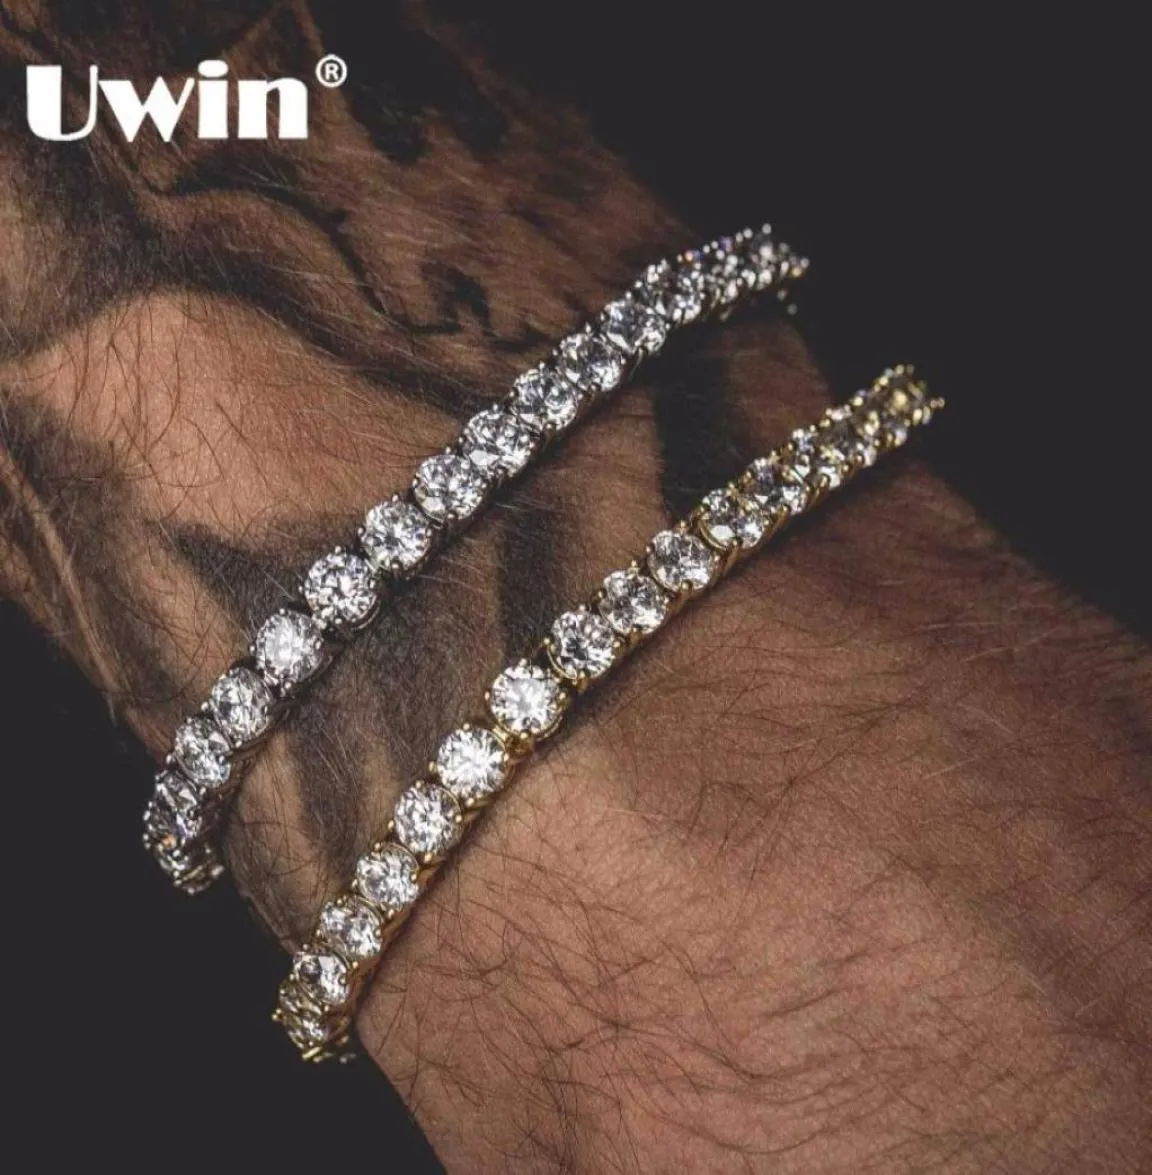 Uwin Round Cut Tennis Bracelet 5mm Zirconia Triple Lock Hiphop Jewelry 1 Row Cubic Luxury Crystal CZ Men Fashion Charm Bracelets728443183